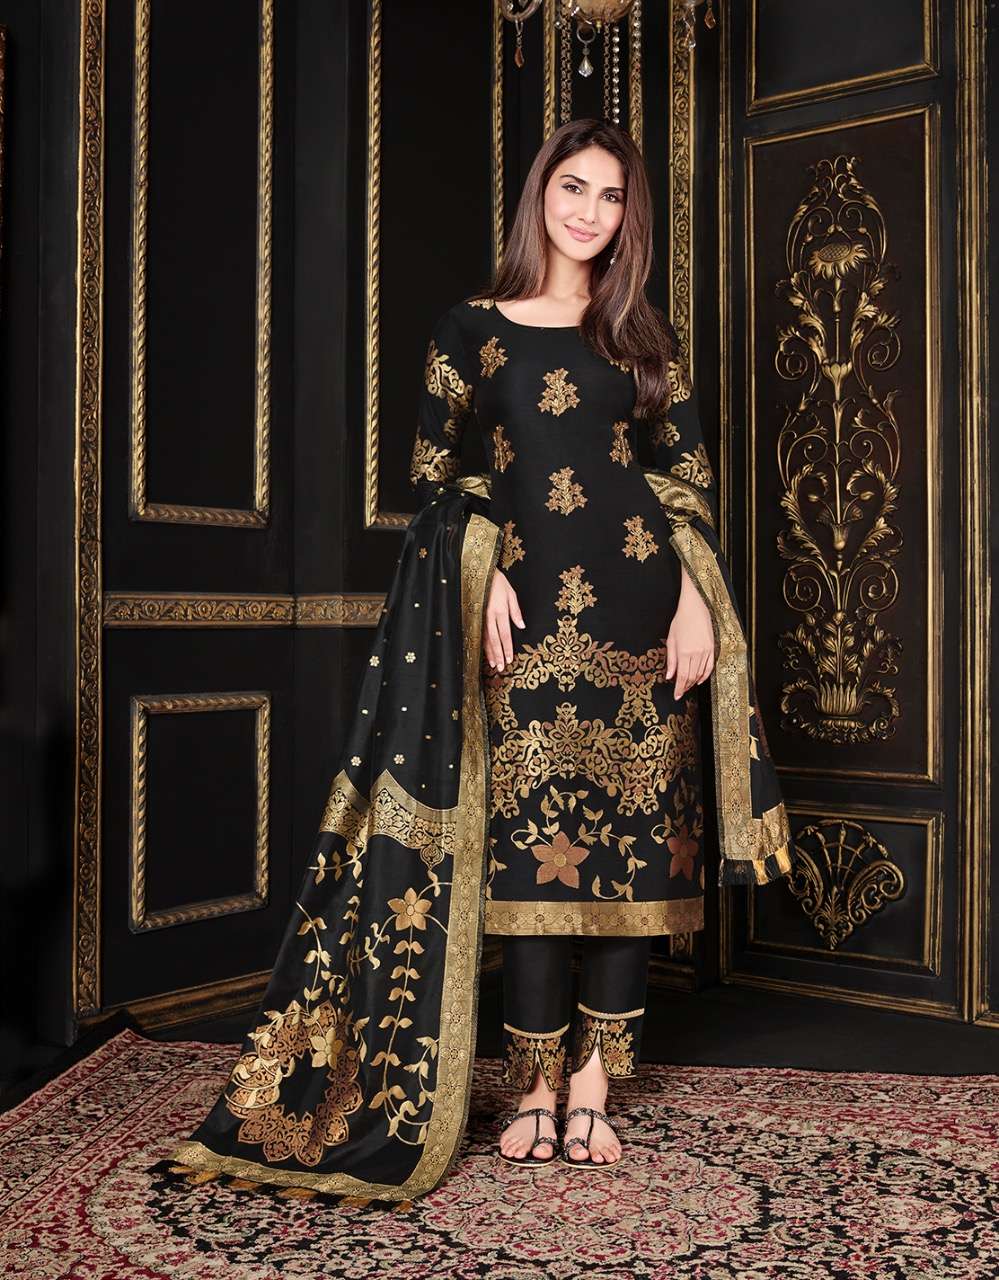 lily & lali silk kari 8021-8028 party wear designer kurti catalogue online supplier surat